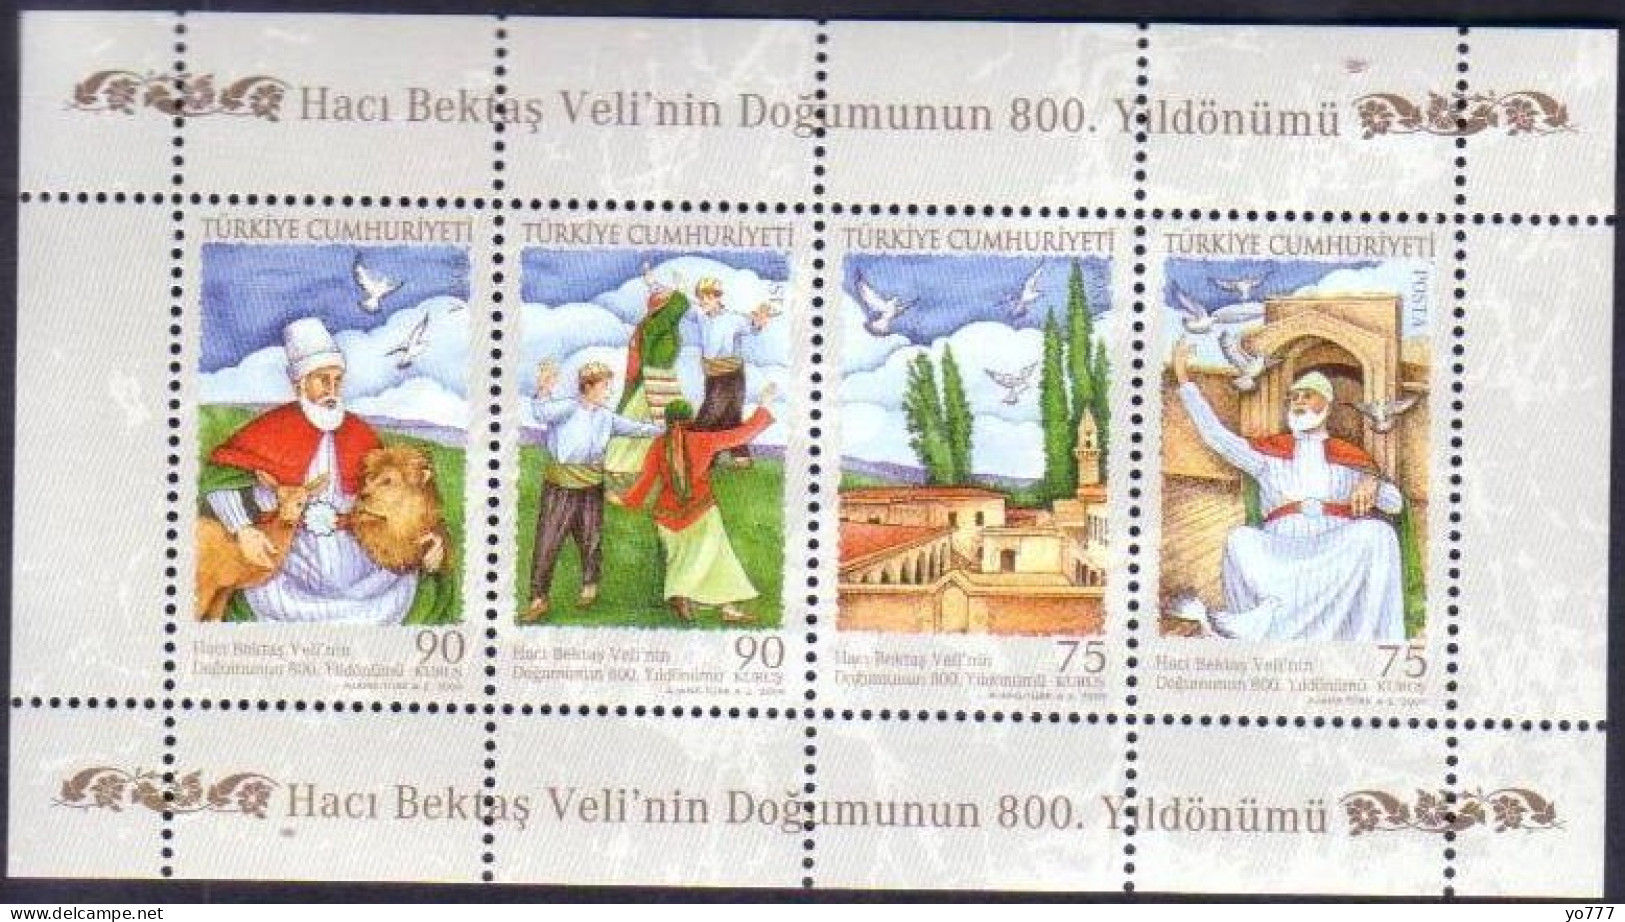 (3773-76) TURKEY 800th ANNIVERSARY OF THE BIRTH OF HACI BEKTAS VELI SOUVENIR SHEET MNH** - Ungebraucht